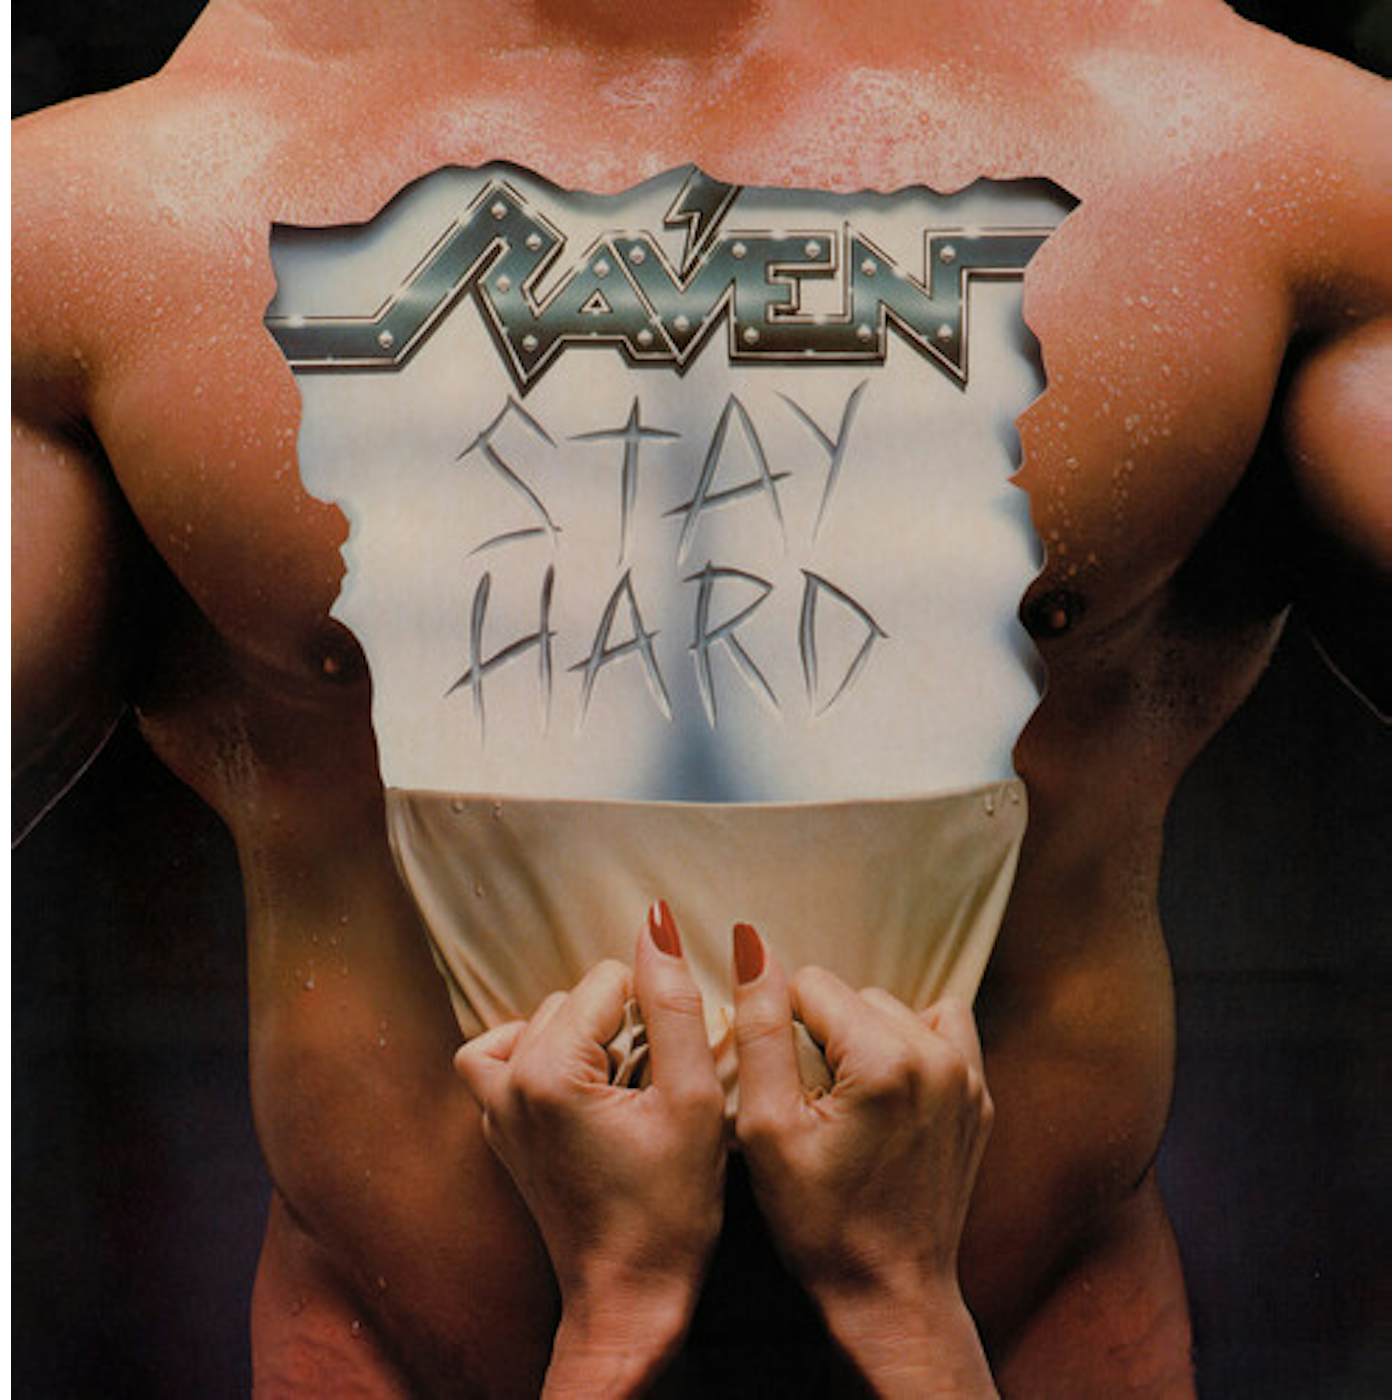 Raven STAY HARD CD